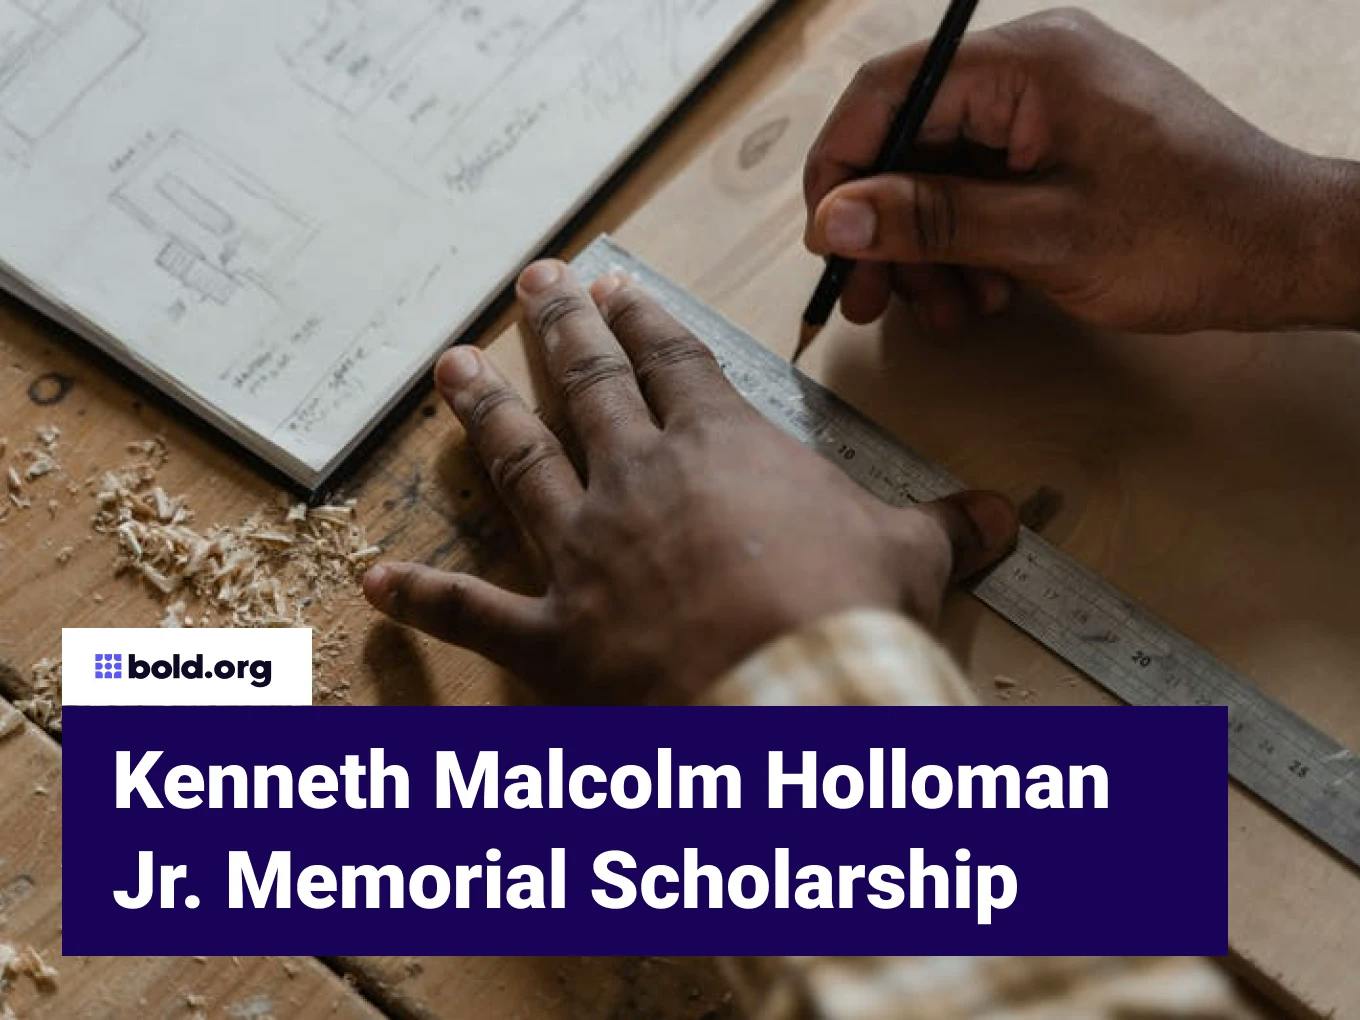 Kenneth Malcolm Holloman Jr. Memorial Scholarship